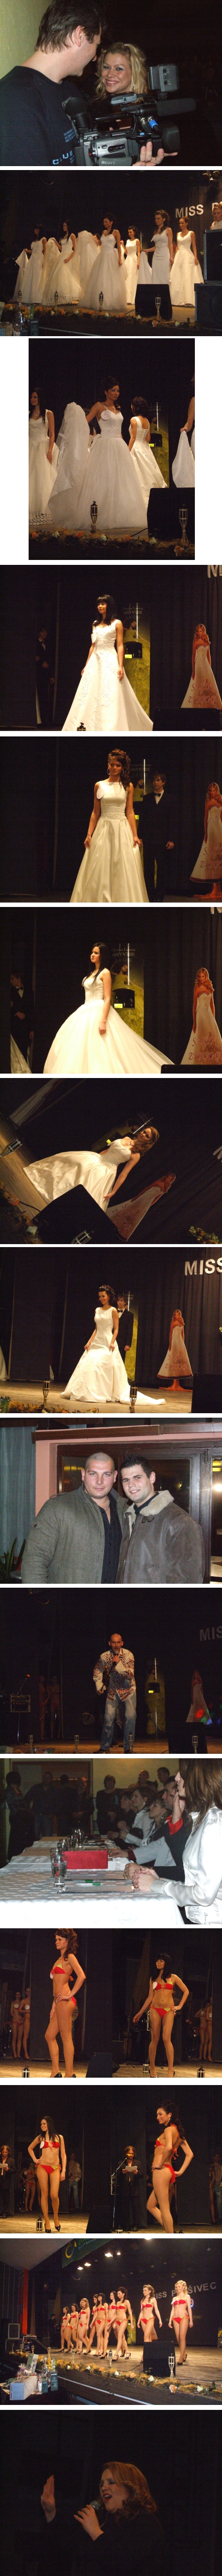 miss plesivec 2009